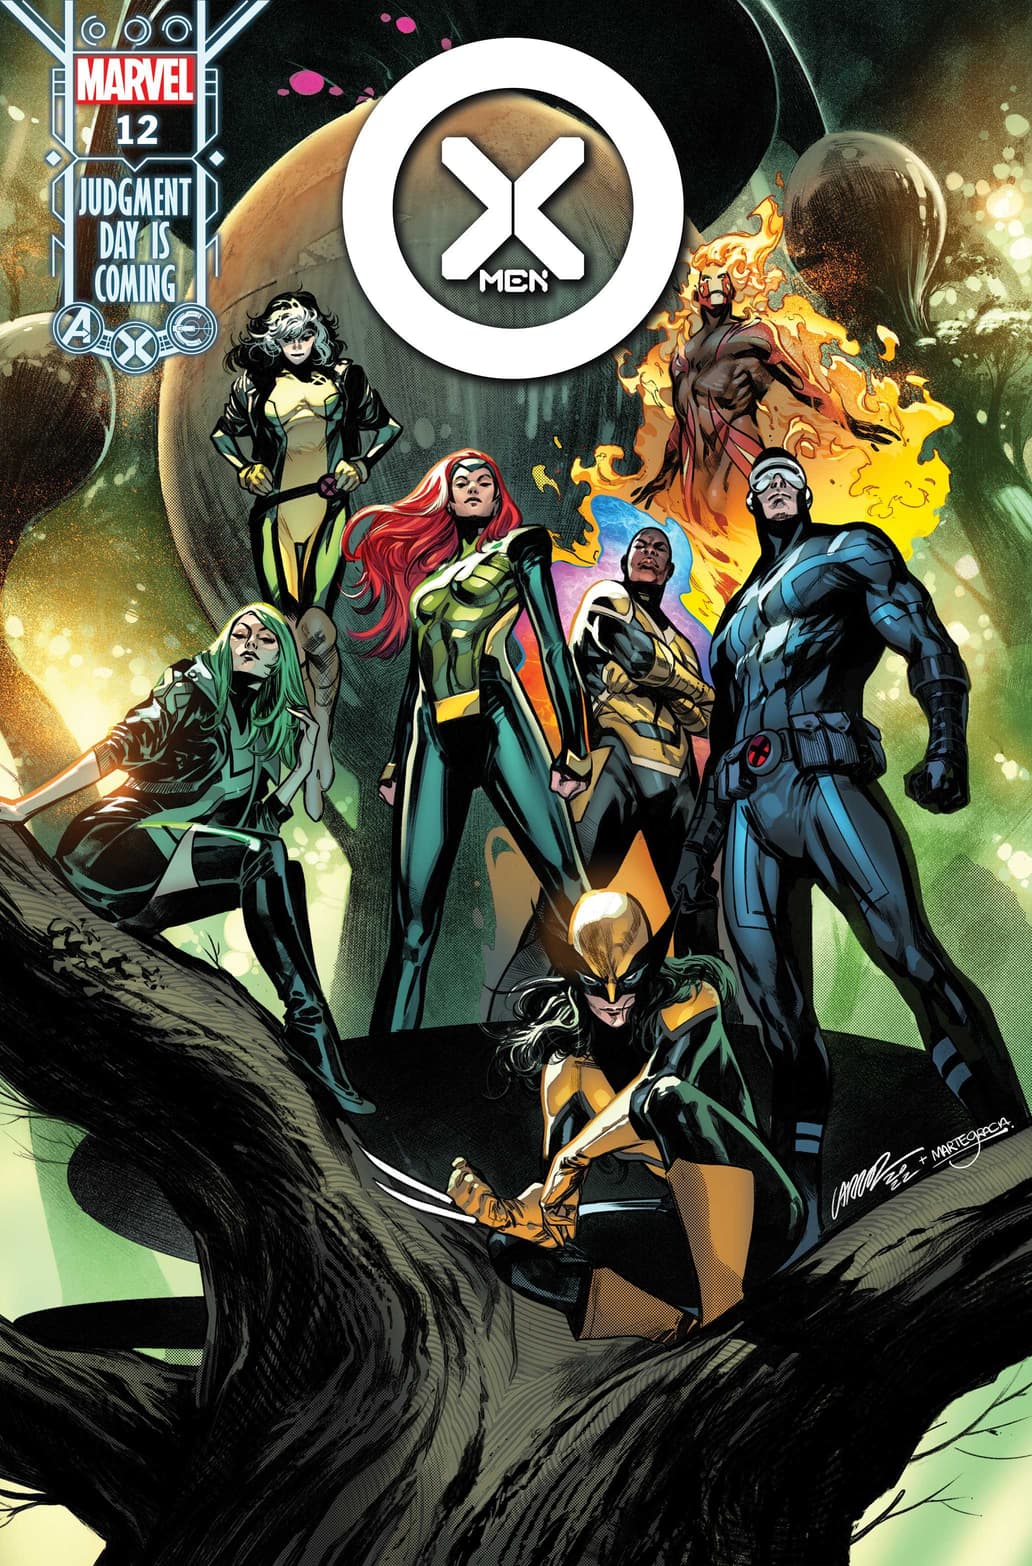 X-Men #12 main cover by Pepe Larraz